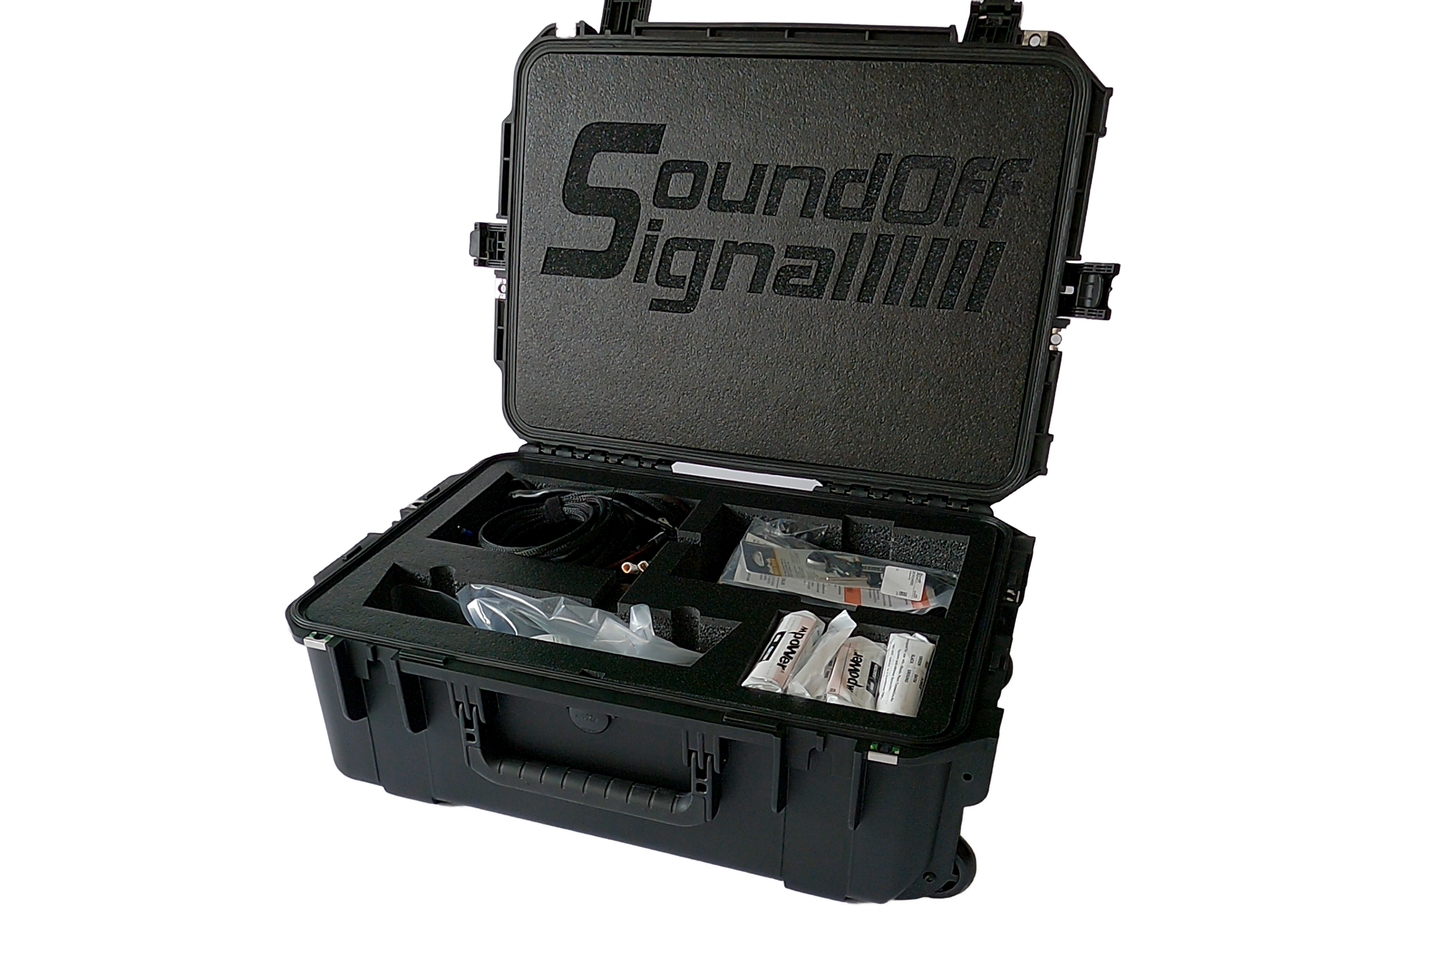 Soundoff Signal ETRDVK002 Rapid Deployment Vehicle Warning Kit